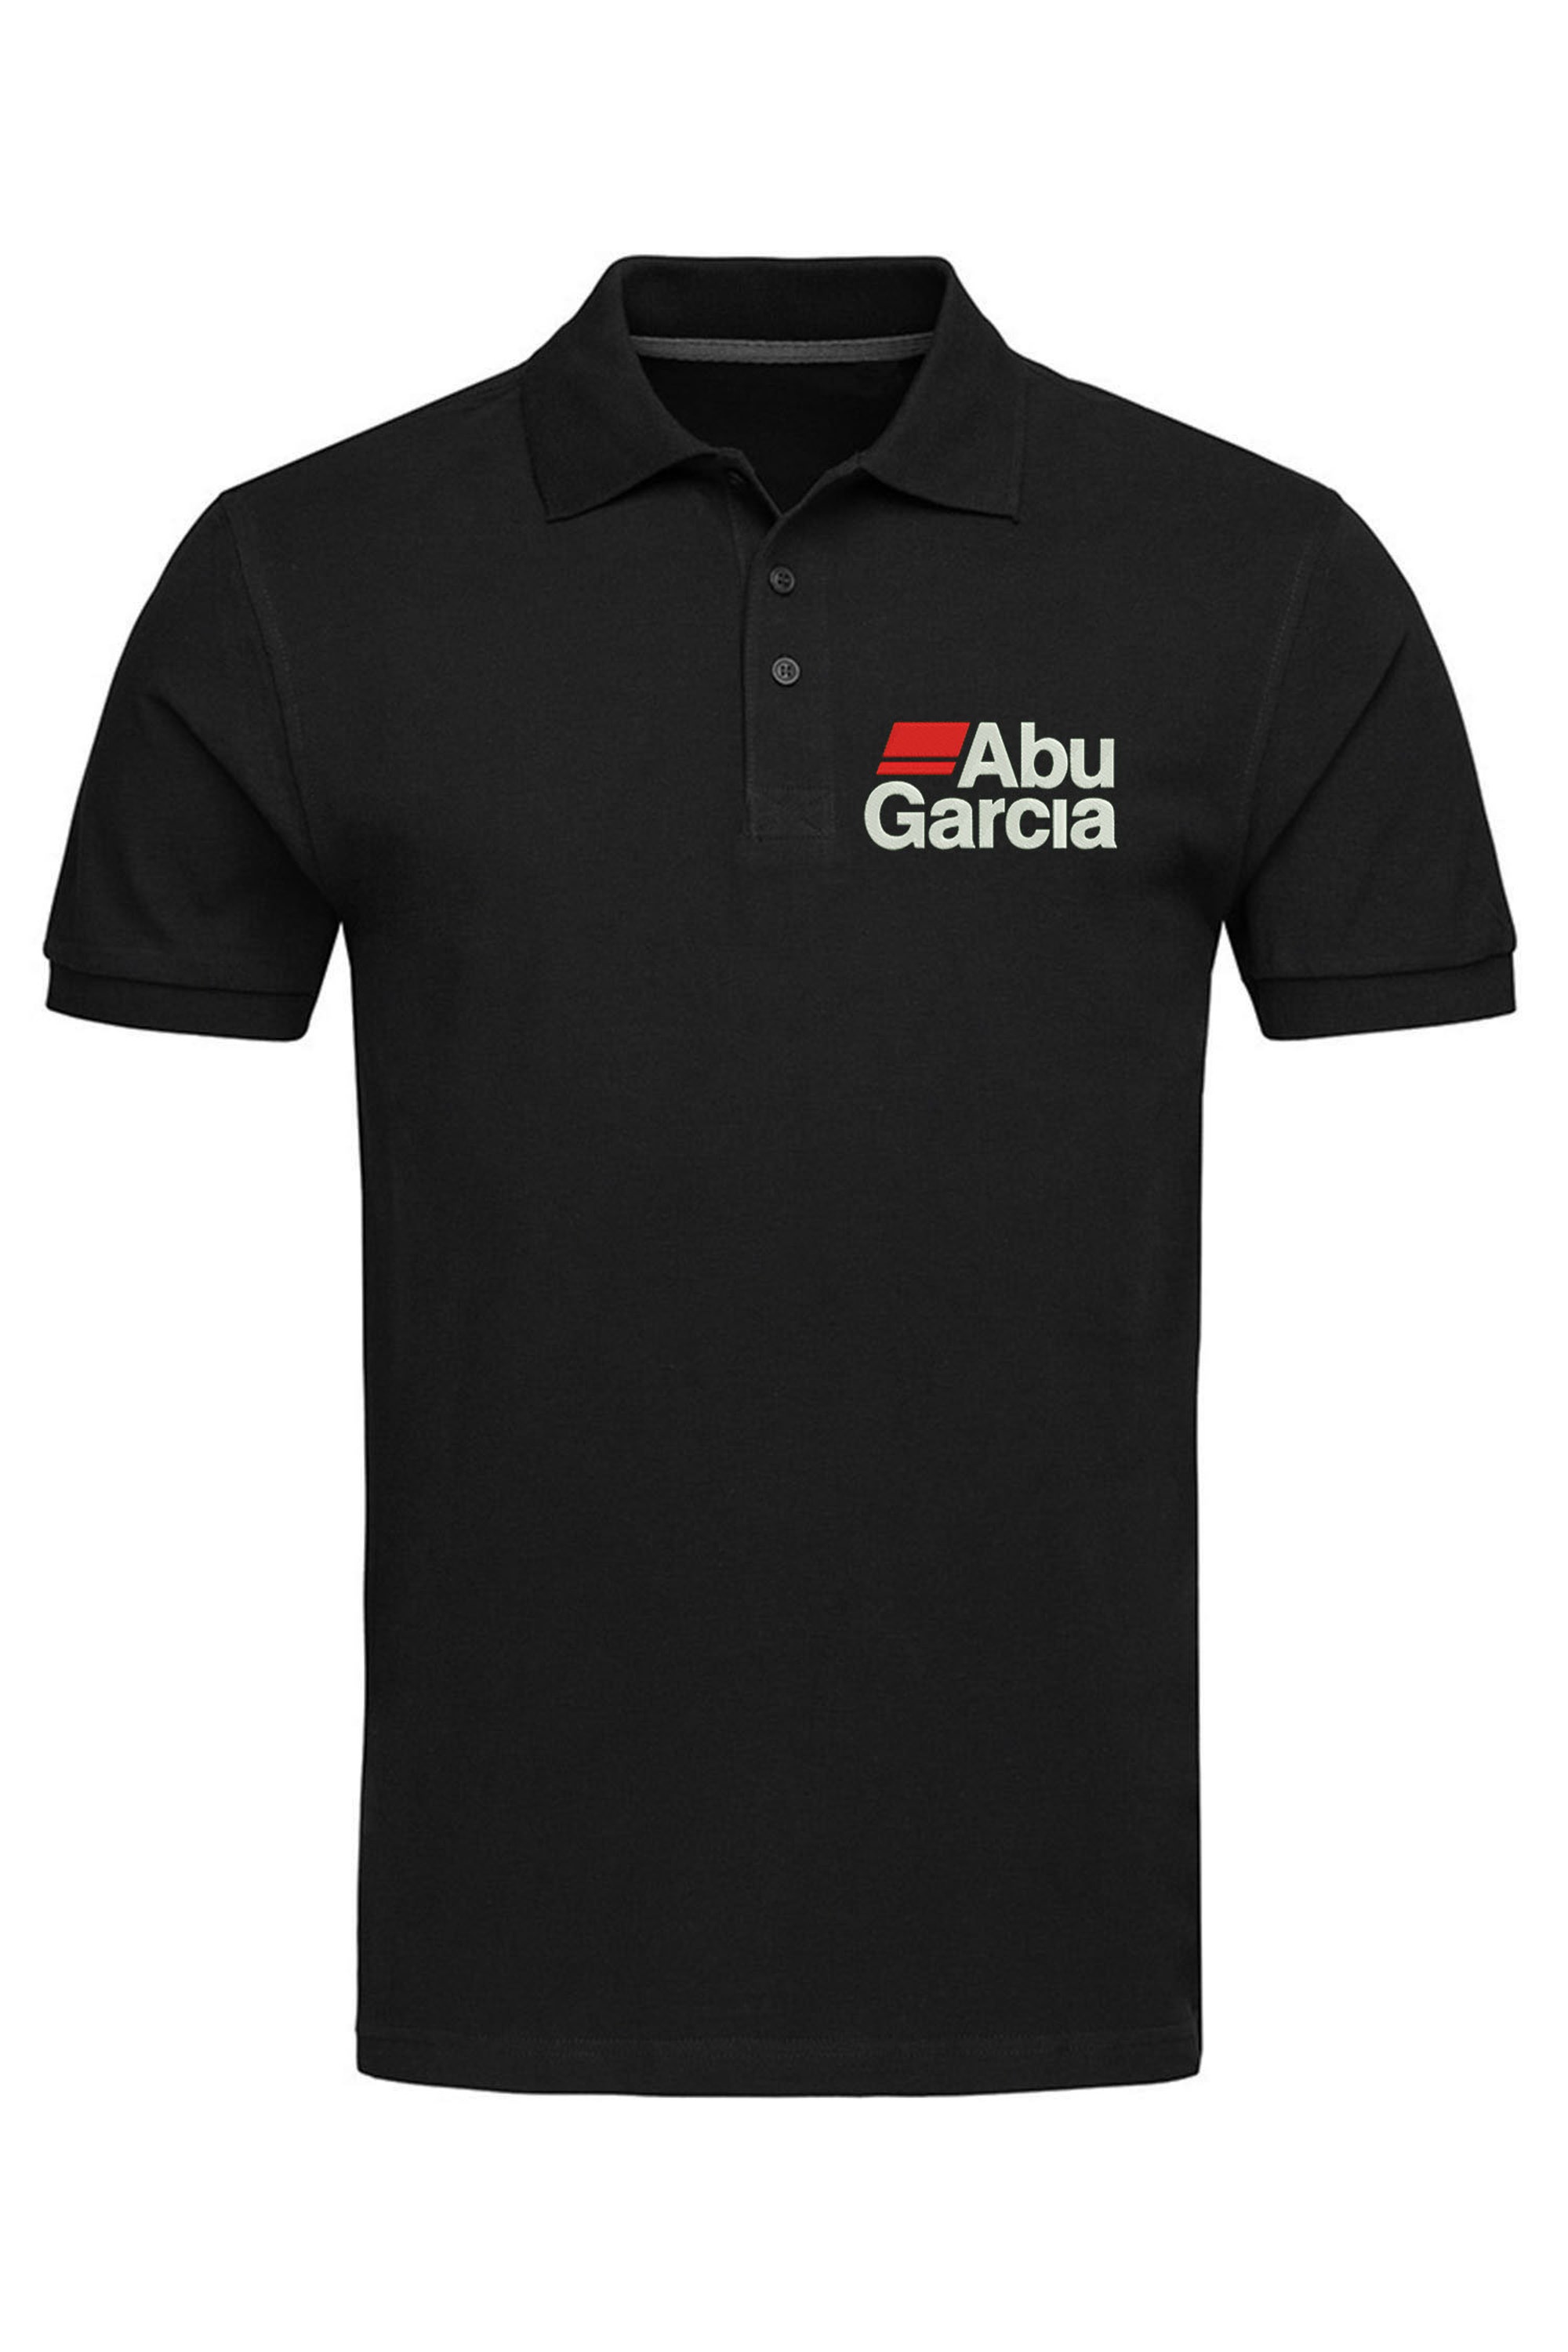 Abu Garcia Fishing Man's Polo Shirt Embroidered Design